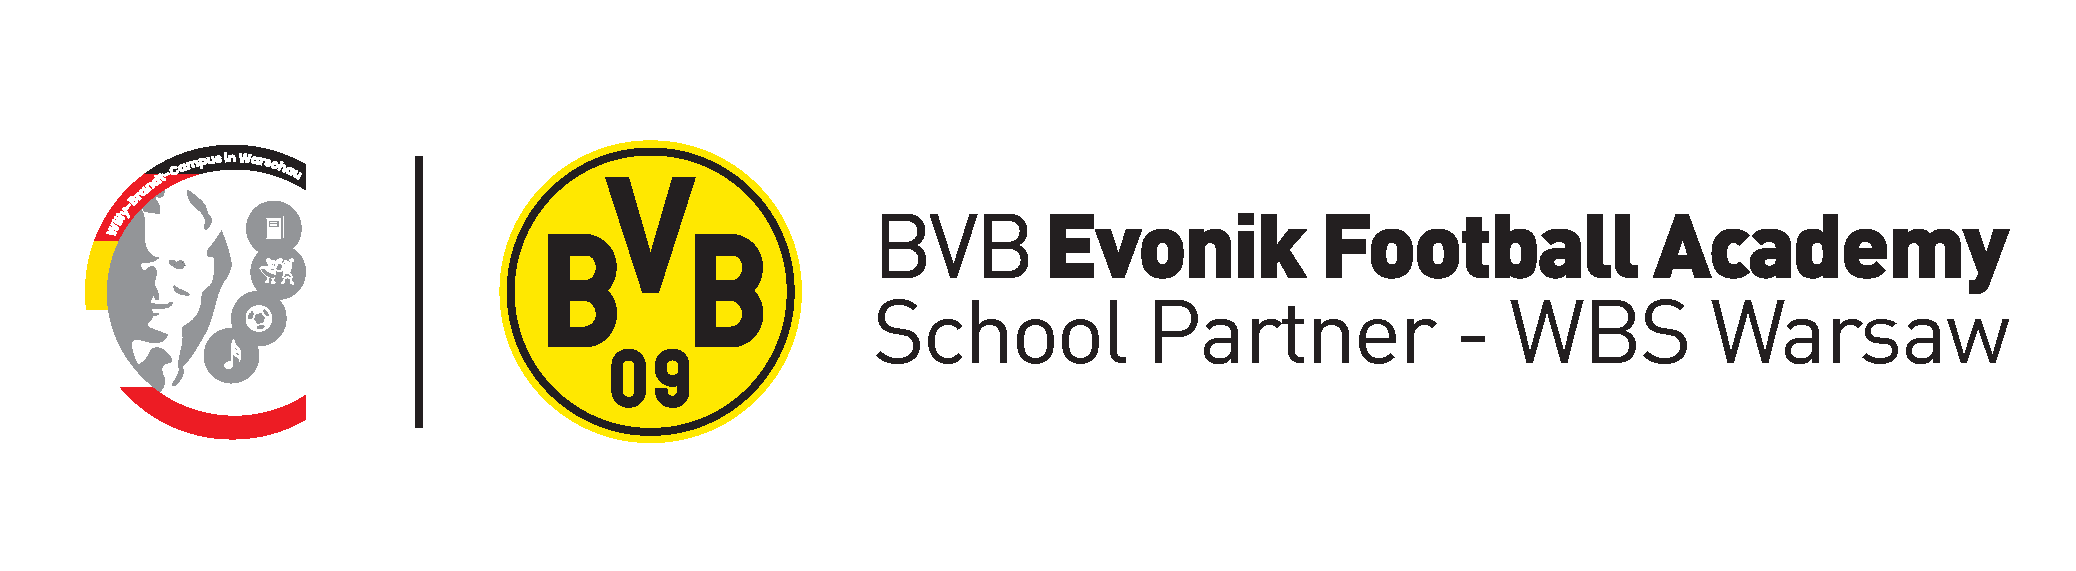 BVB_Academy_WBS_Warsaw___logo___School_Partner___WBS_Warsaw_B.PNG